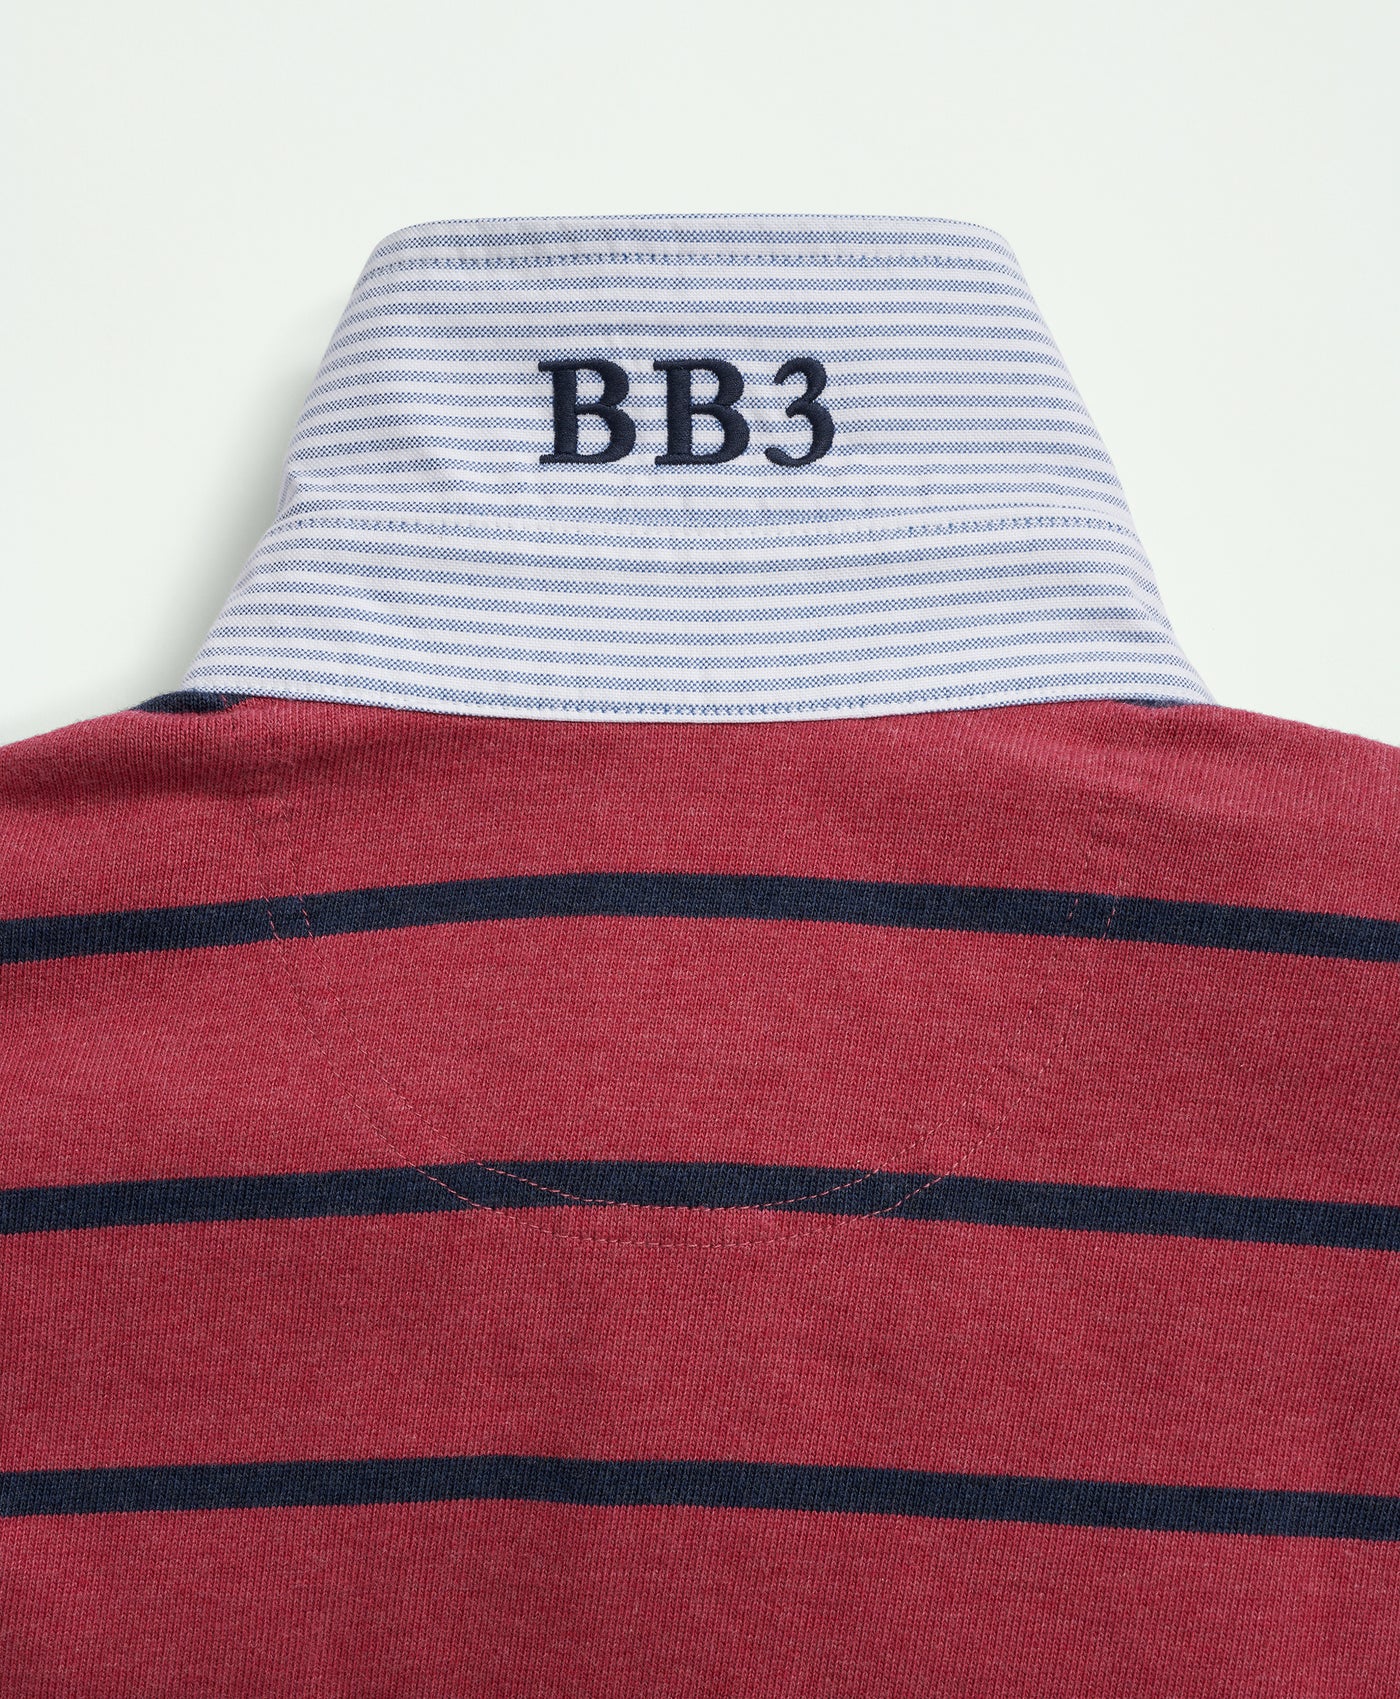 Cotton BB#3 Stripe Rugby Shirt